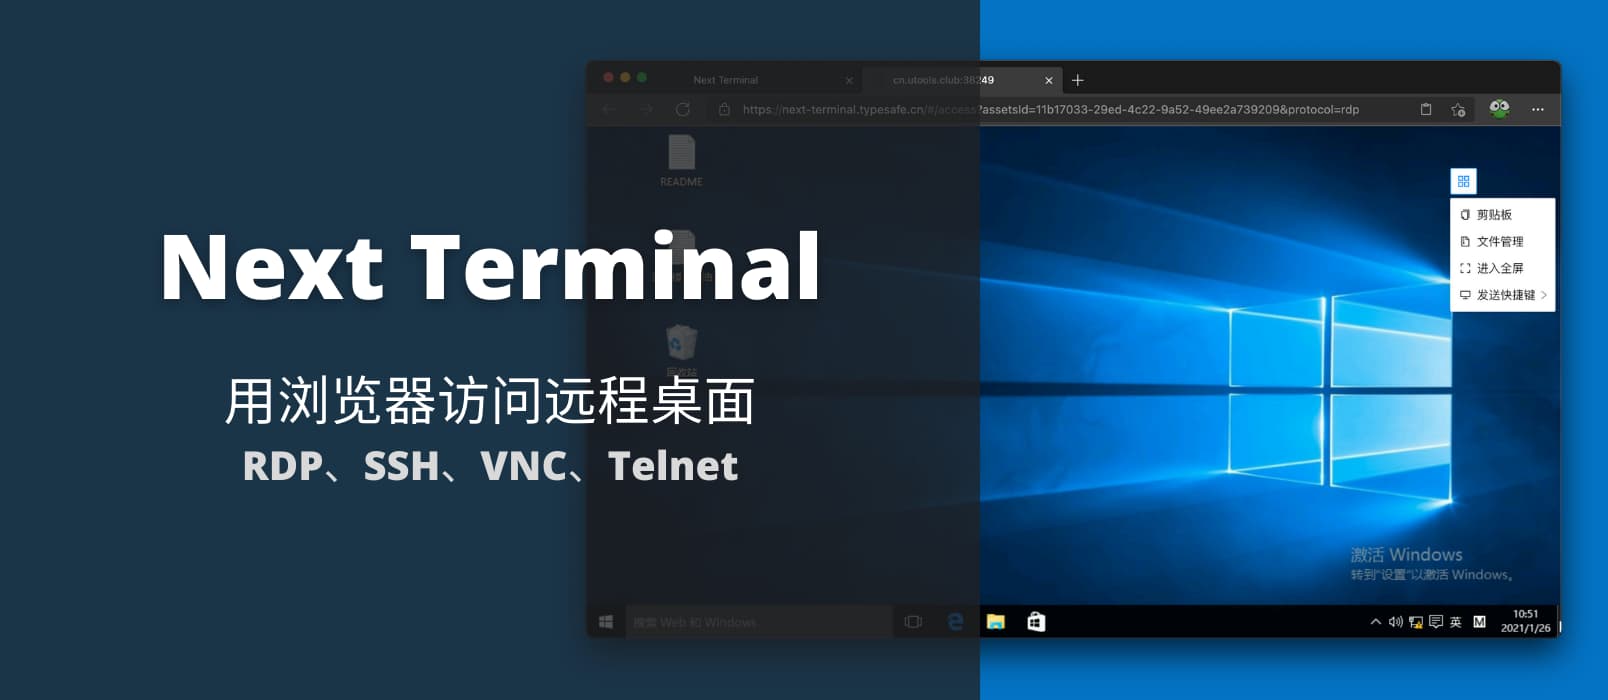 Next Terminal - 用浏览器访问远程桌面，支持 RDP、SSH、VNC 和 Telnet